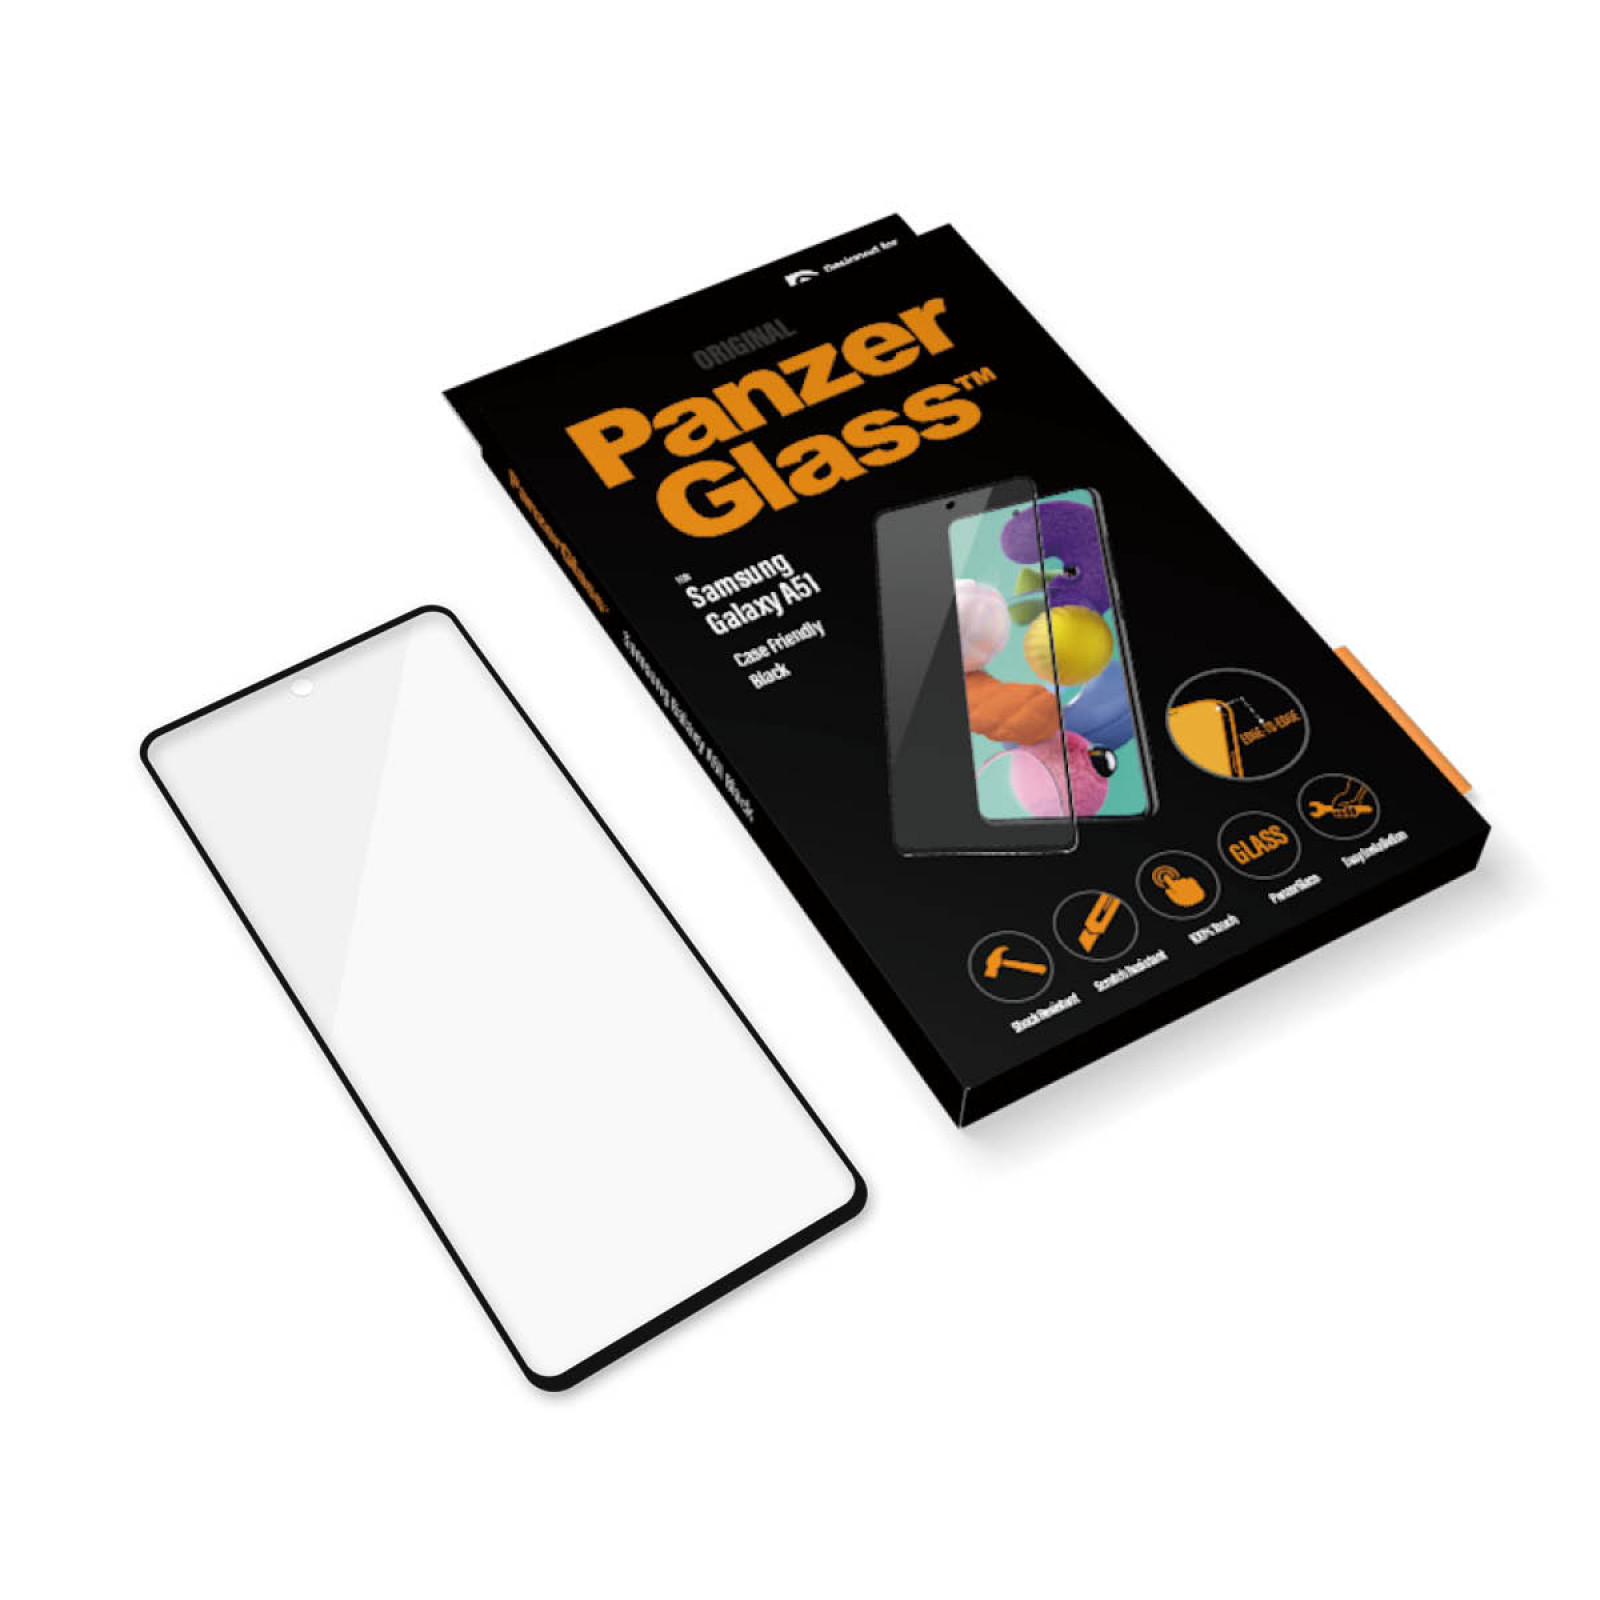 Стъклен протектор PanzerGlass за Samsung Galaxy A51 Case Friendly Черен